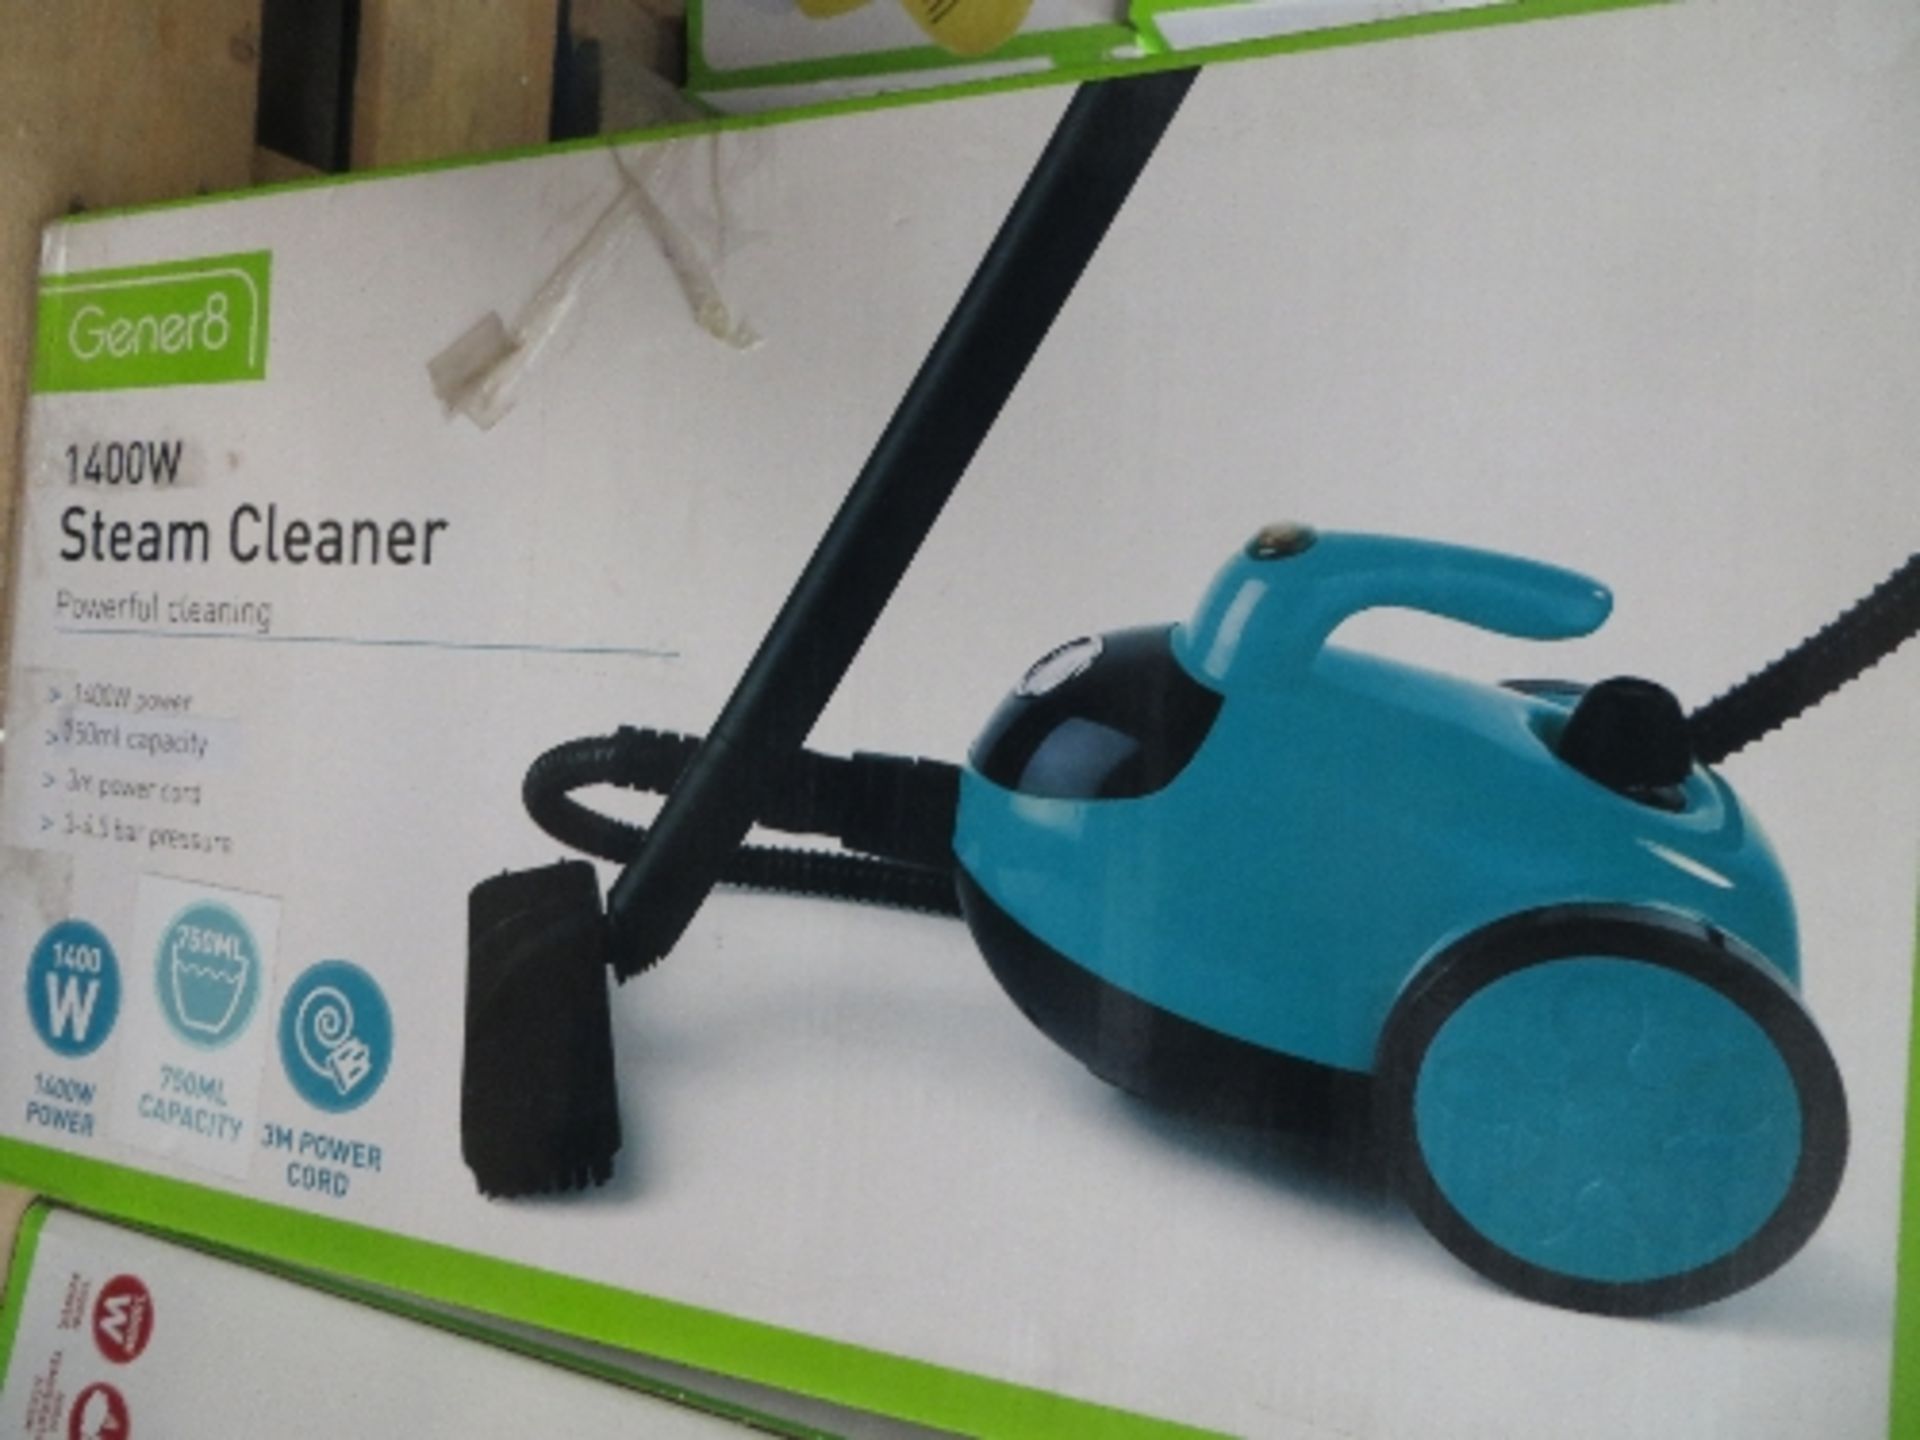 Gener8 Steam Cleaner